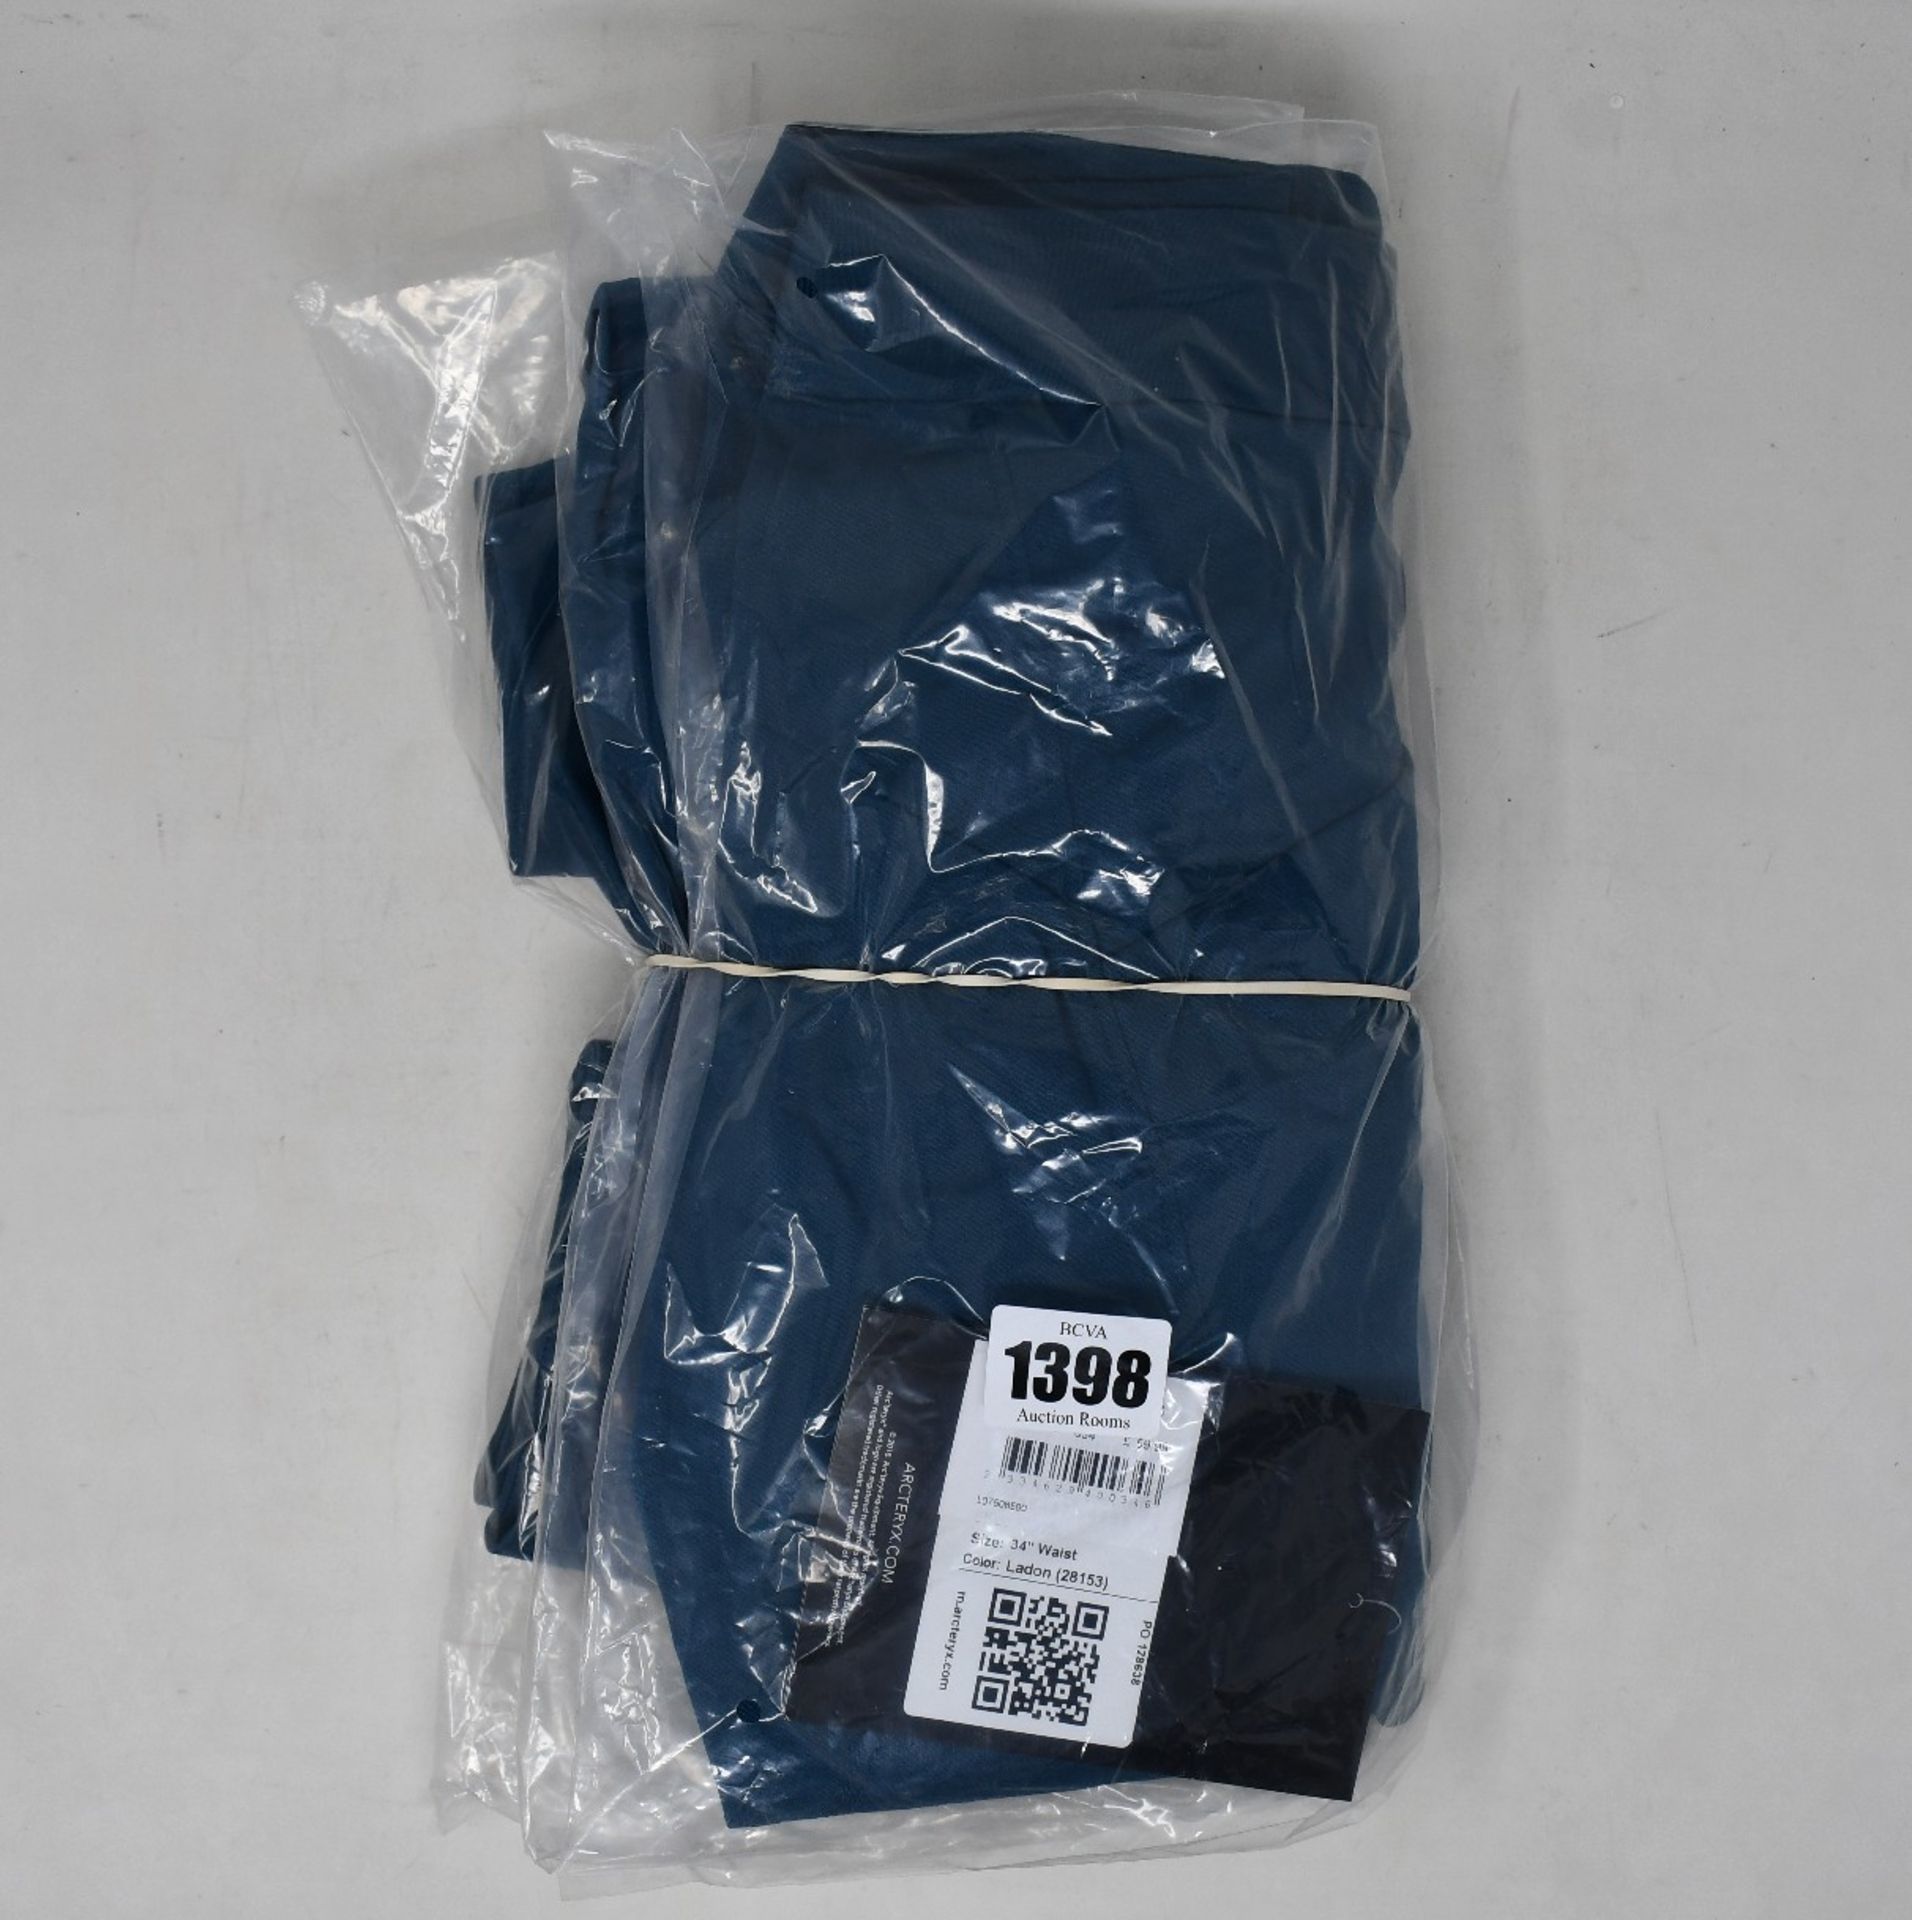 Three pairs of Arc'Teryx Konseal shorts (2 x 34", 1 x 36" - RRP £70 each).